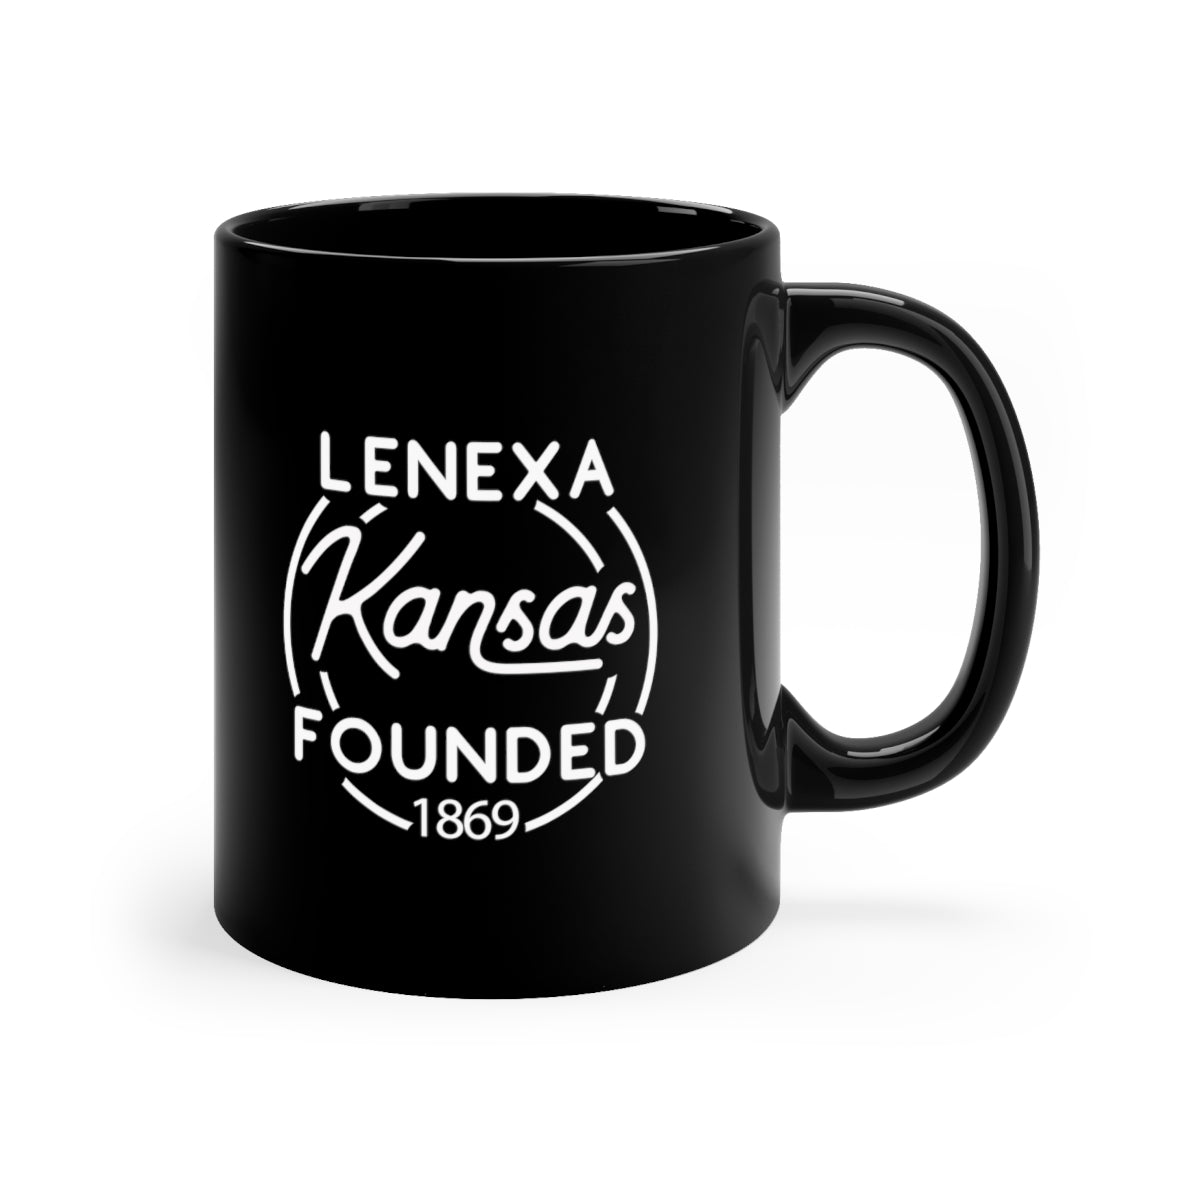 11oz black ceramic mug for Lenexa, Kansas Side view